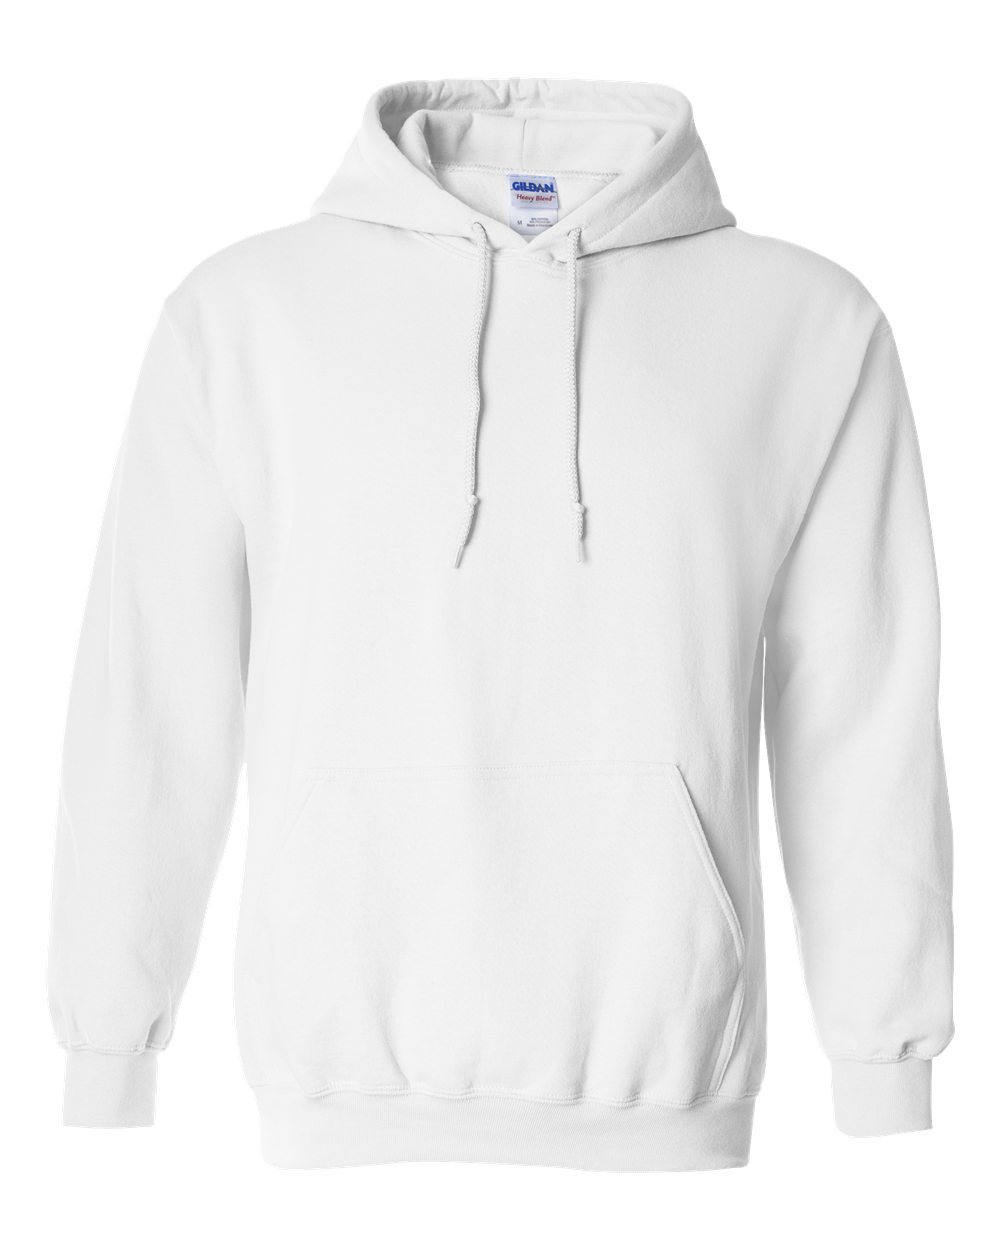 Gildan G18500 Heavy Blend Adult Hooded Sweatshirt XL 1 White 1 Safety Pink 